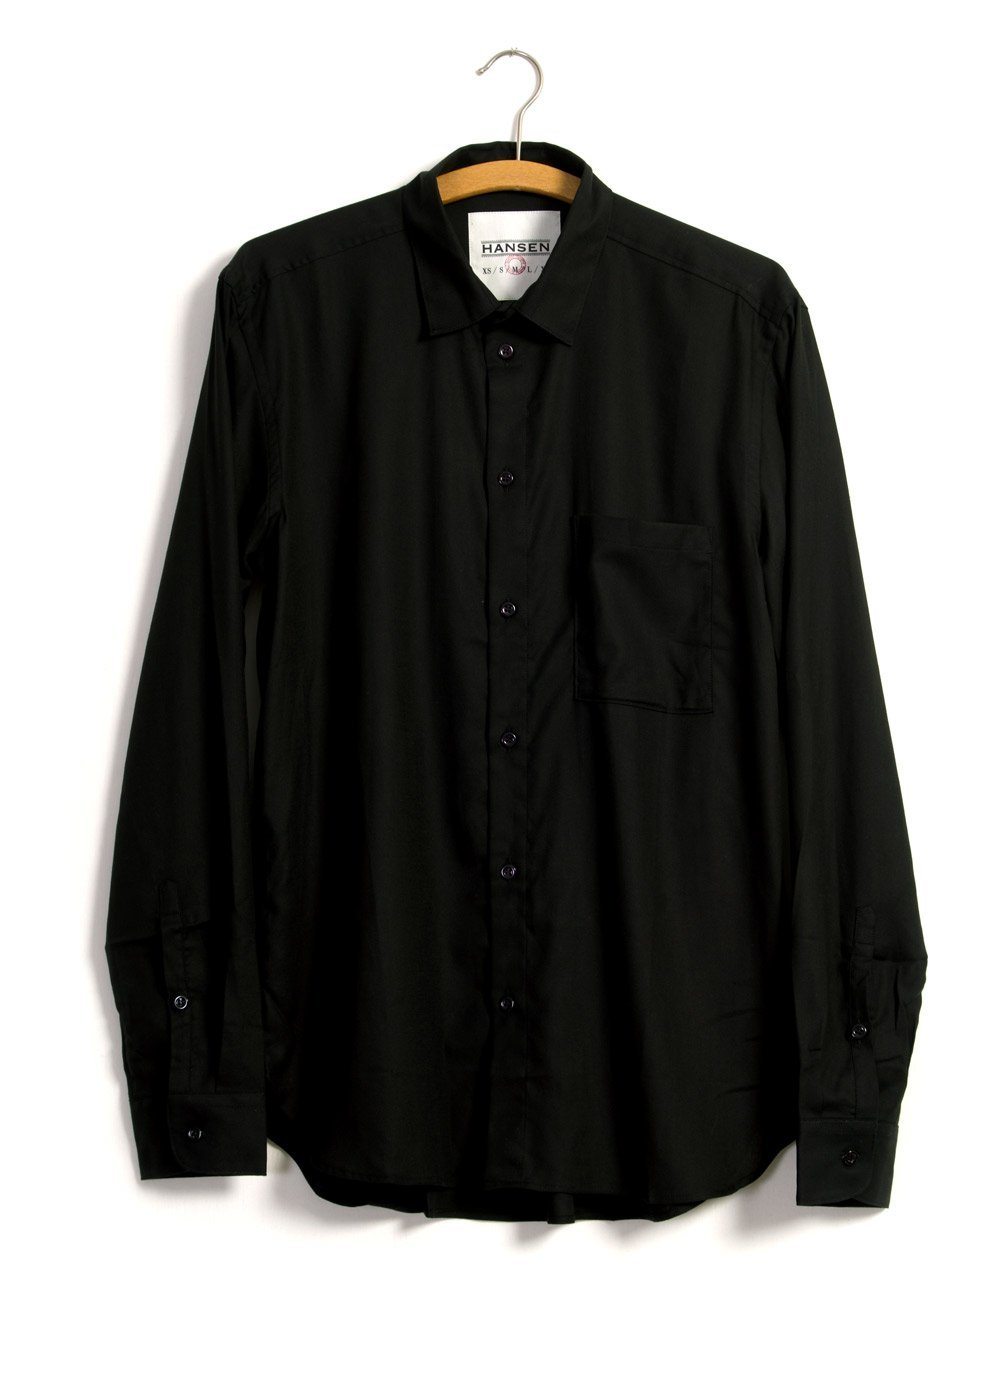 HANSEN Garments - HENNING | Casual Classic Shirt | Black - HANSEN Garments